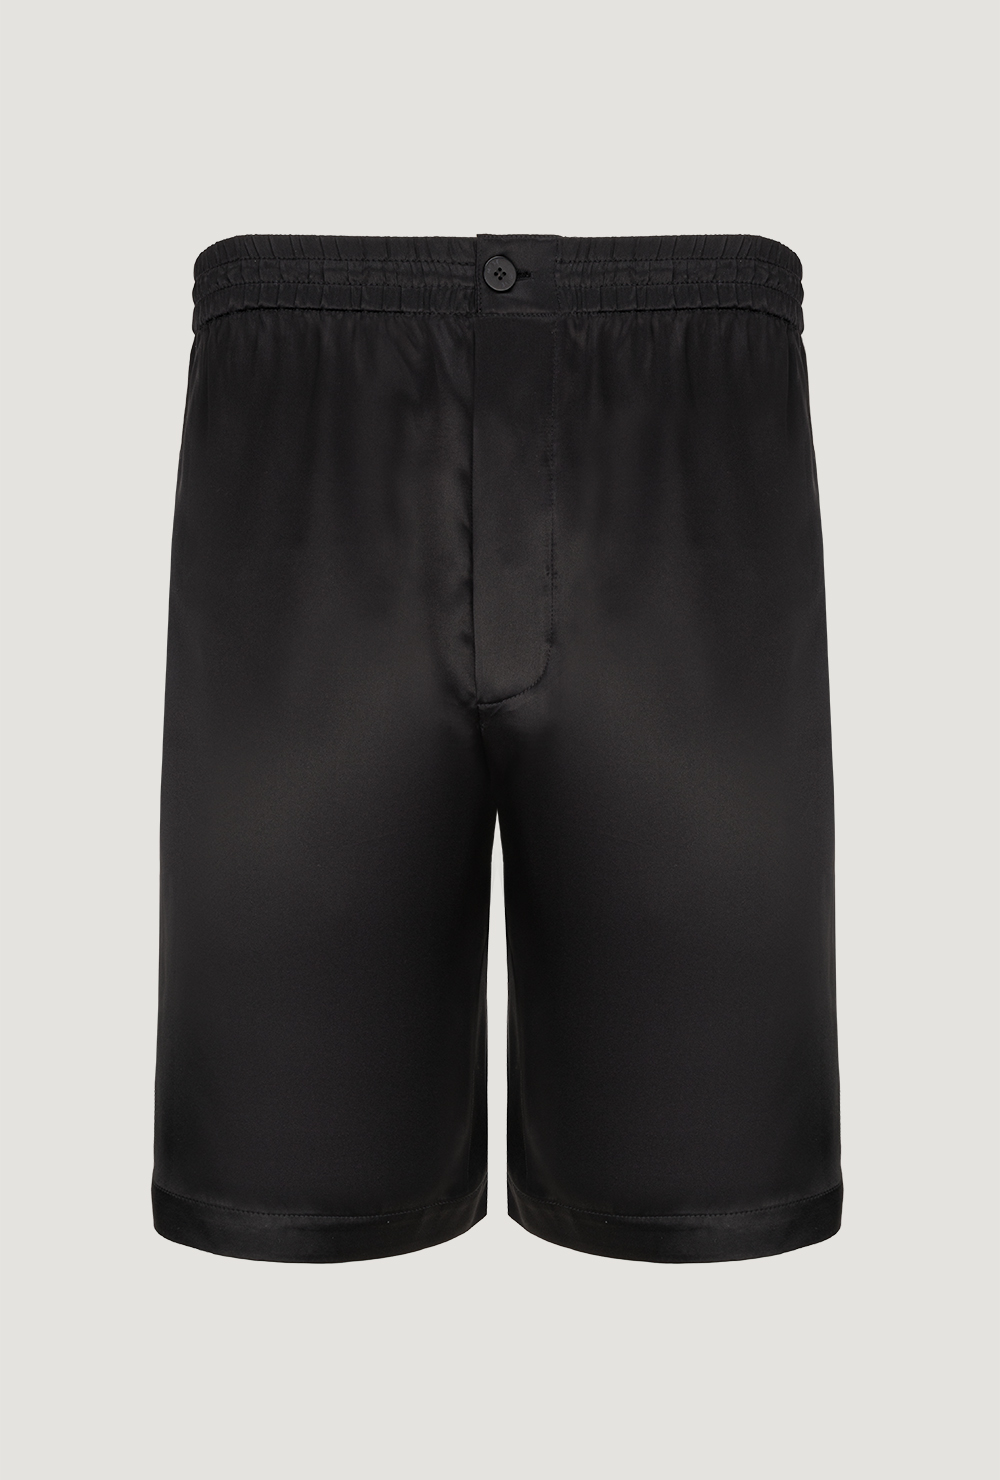 Men's silk shorts